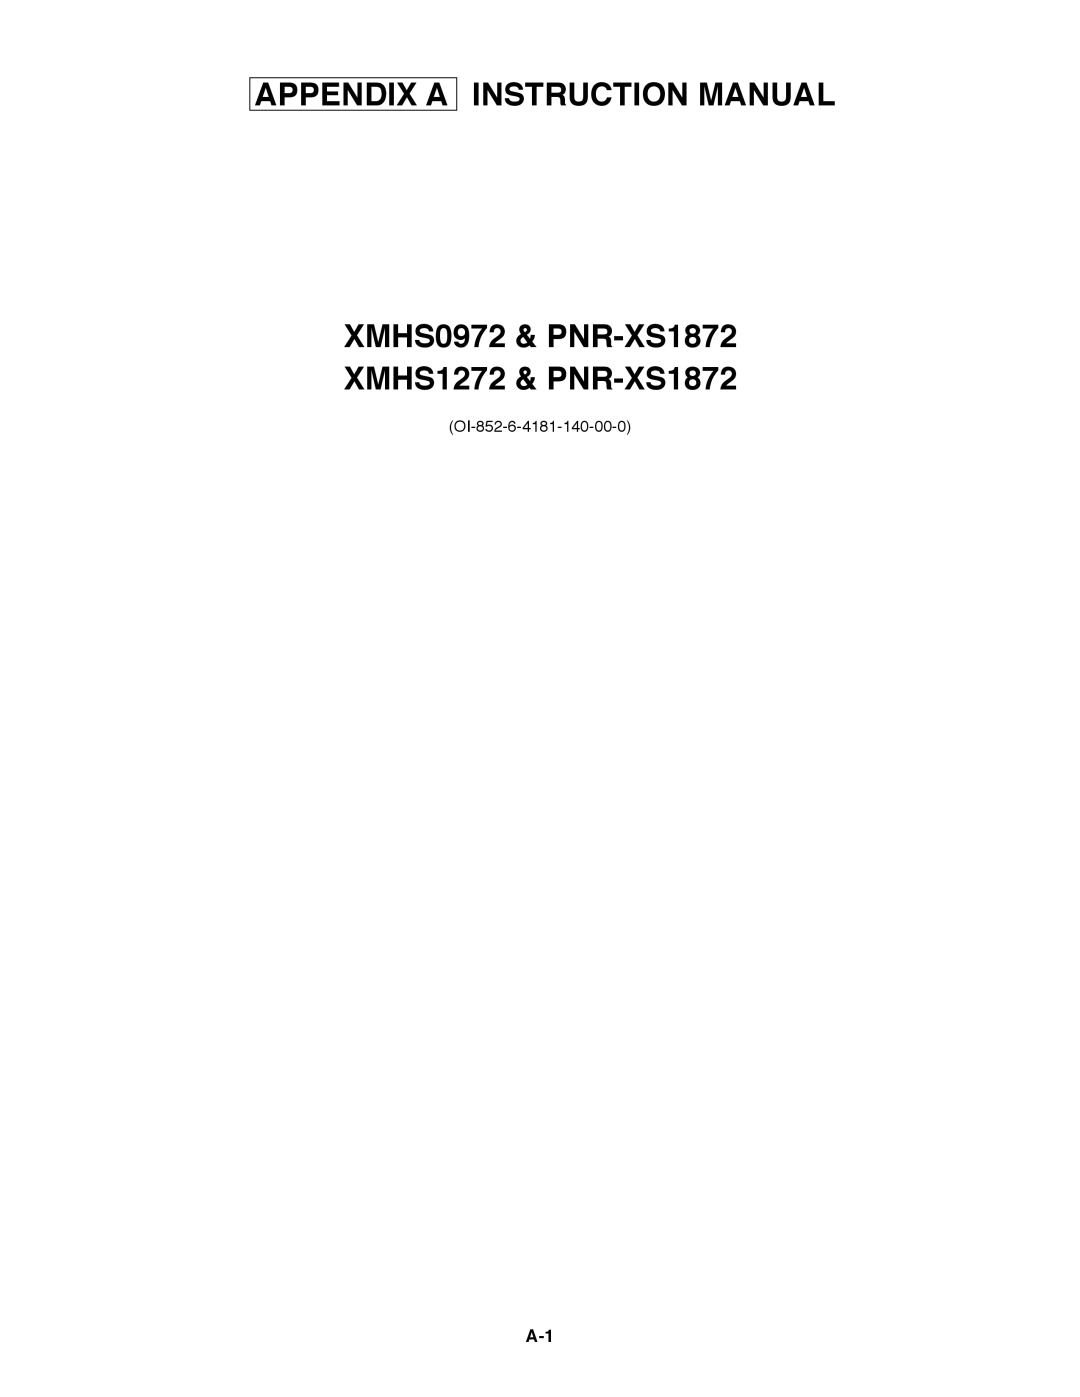 Sanyo service manual Appendix A Instruction Manual, XMHS0972 & PNR-XS1872XMHS1272 & PNR-XS1872 